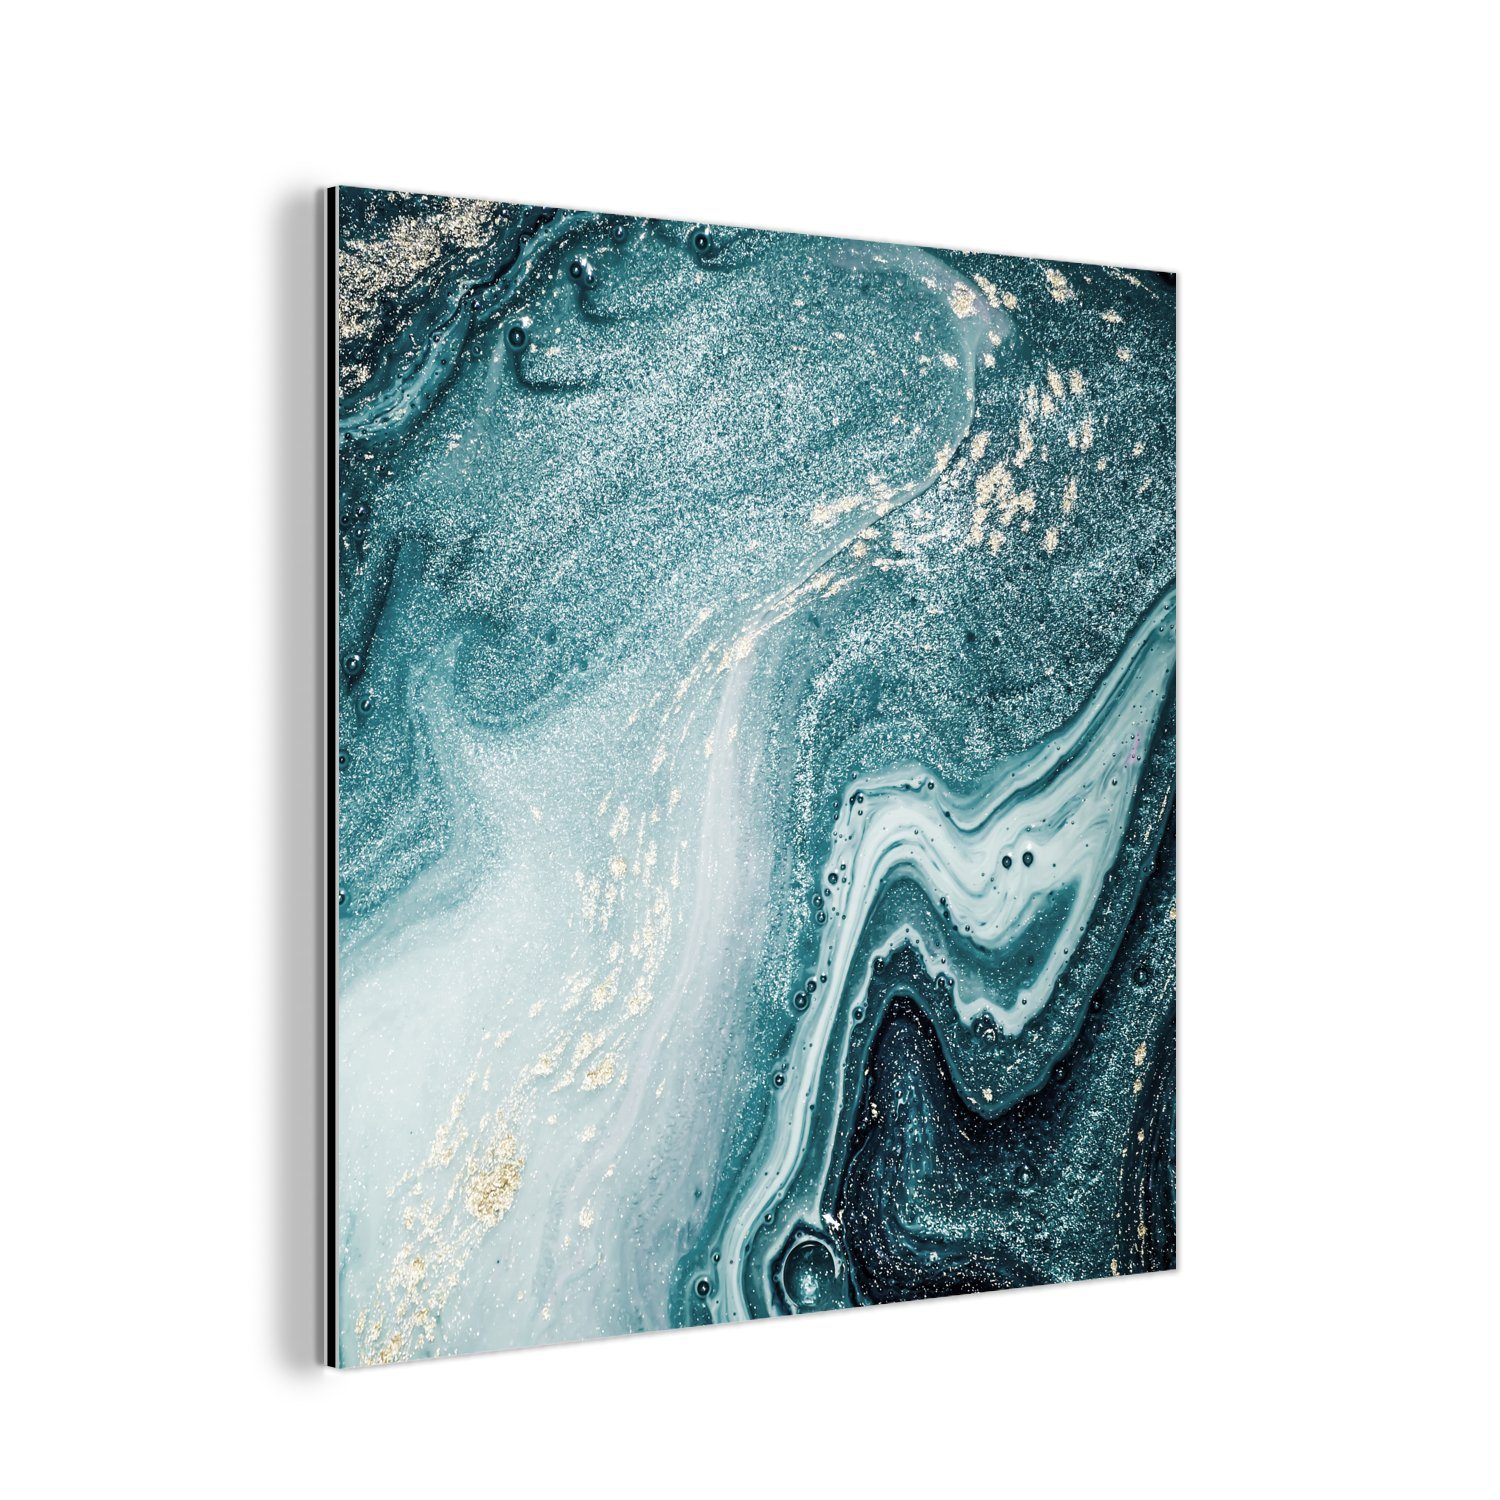 MuchoWow Metallbild Edelsteine - Blau - Natur - Marmor - Abstrakt, (1 St), Alu-Dibond-Druck, Gemälde aus Metall, Aluminium deko